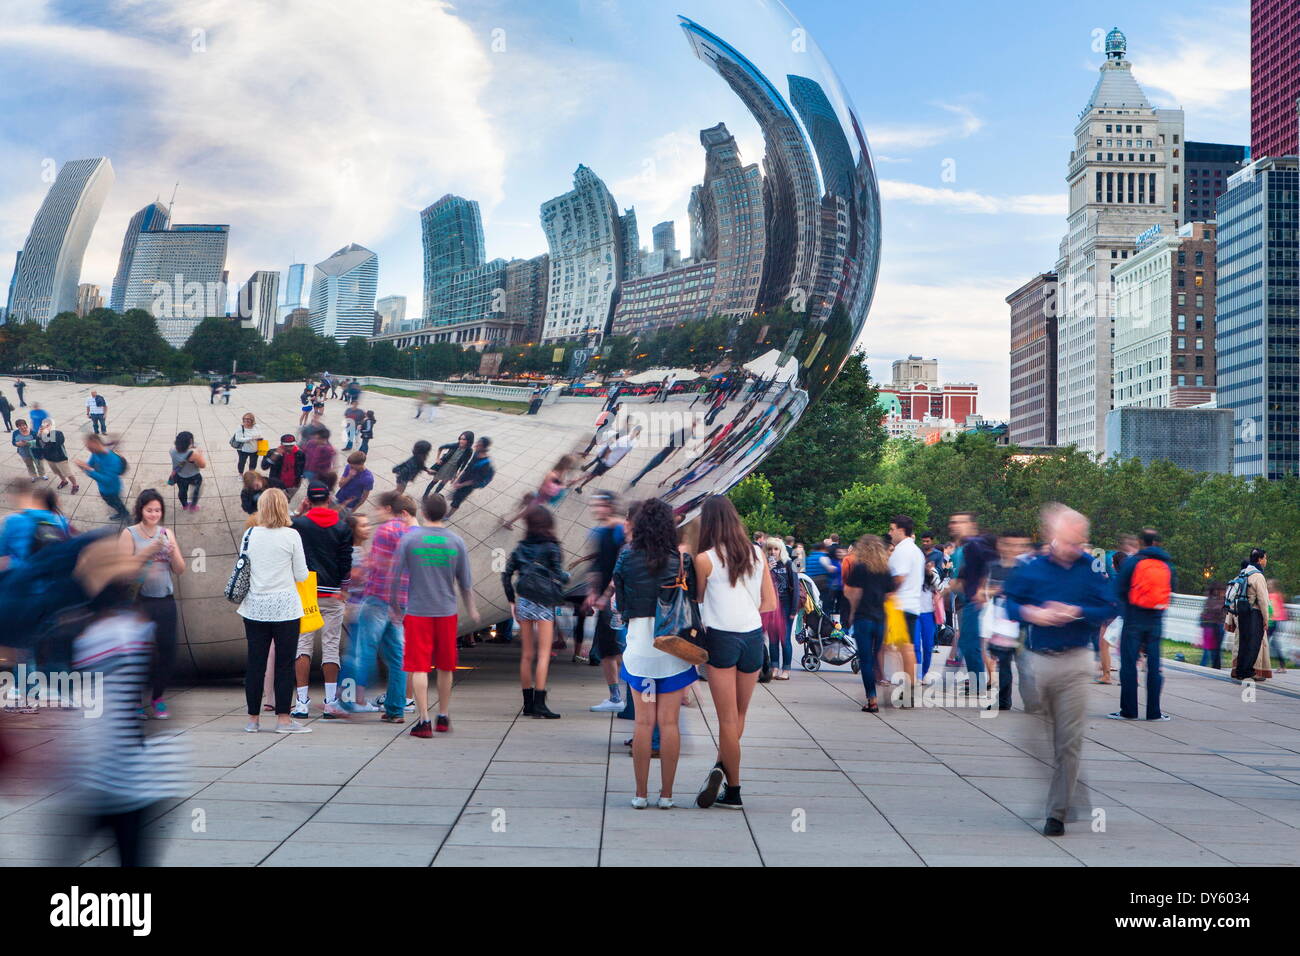 The Cloud Gate Sculpture in Millenium Park, Chicago, Illinois, United States of America, North America Stock Photo